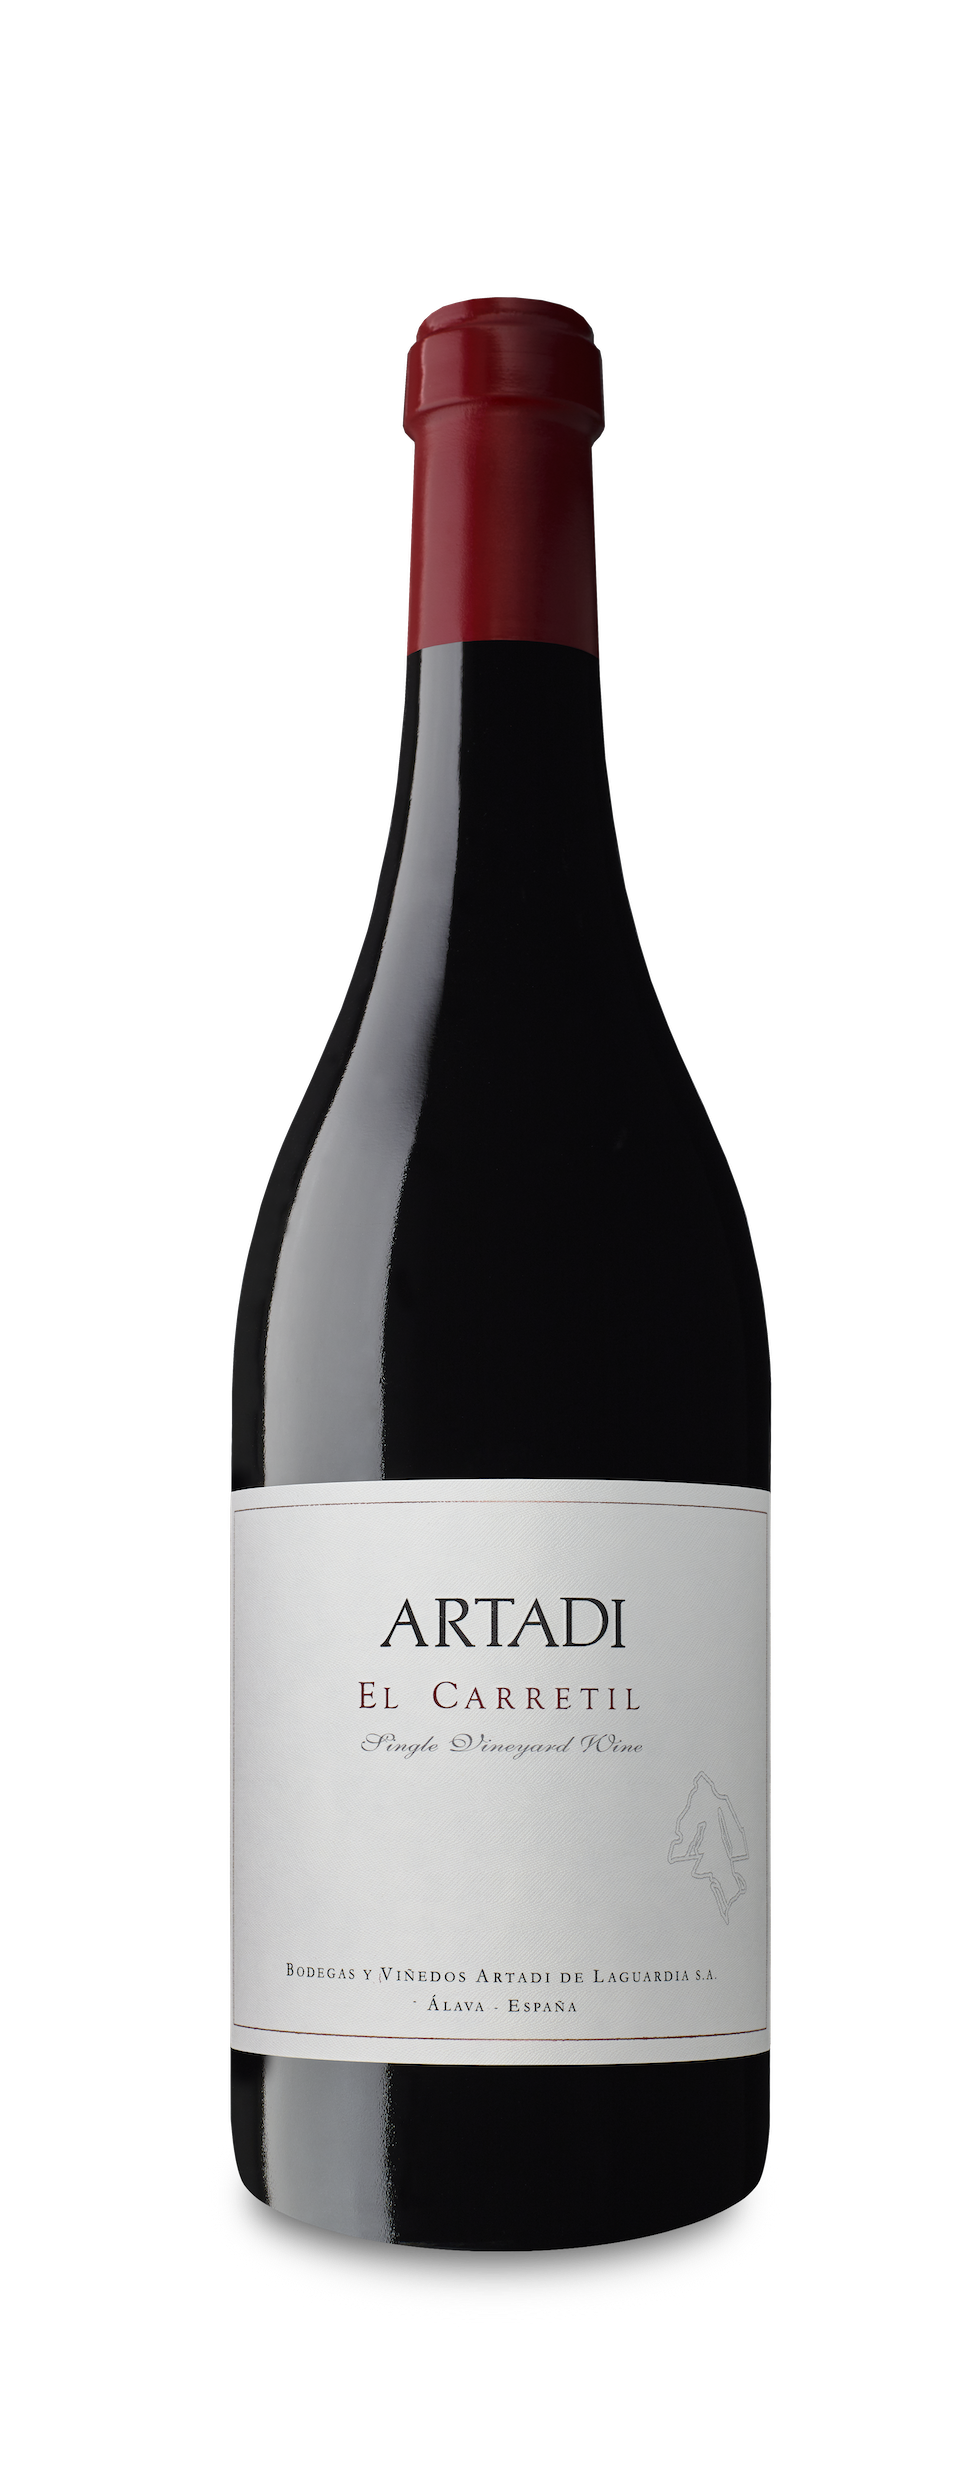 Wine Vins Artadi El Carretil Tinto